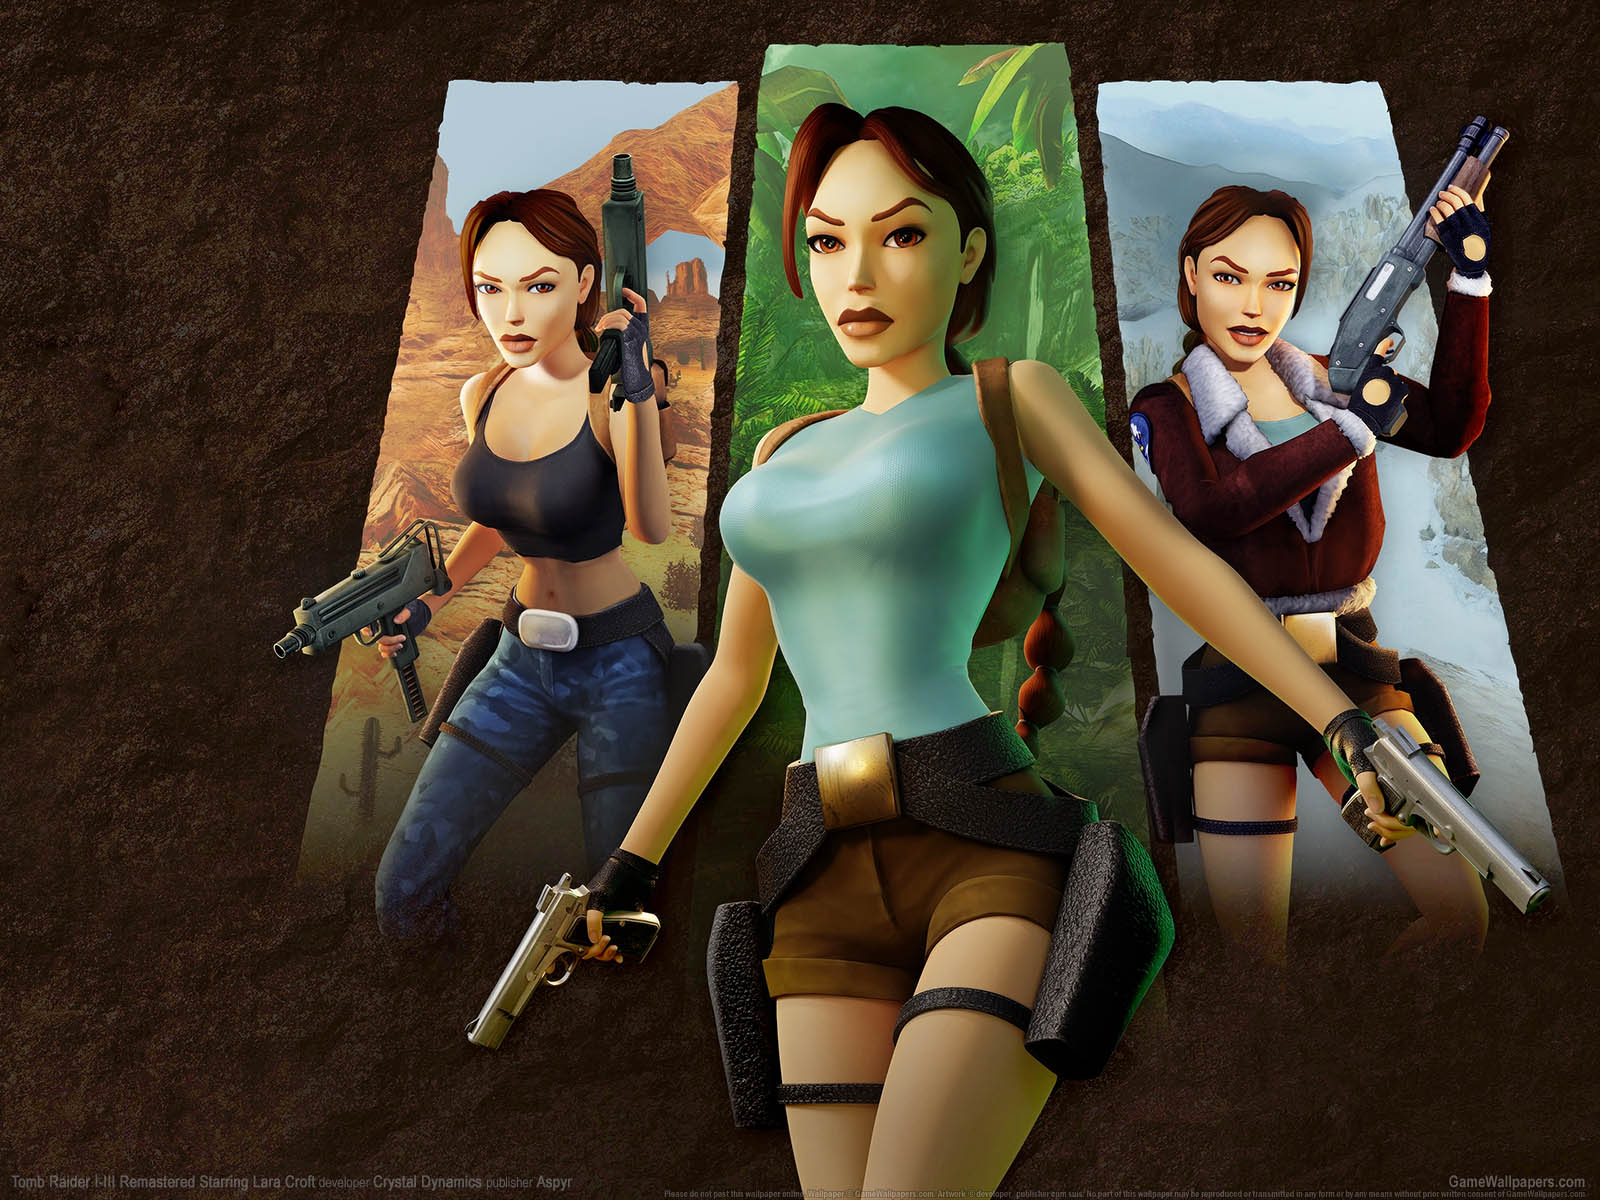 Tomb Raider I-III Remastered Starring Lara Croft wallpaper 01 1600x1200